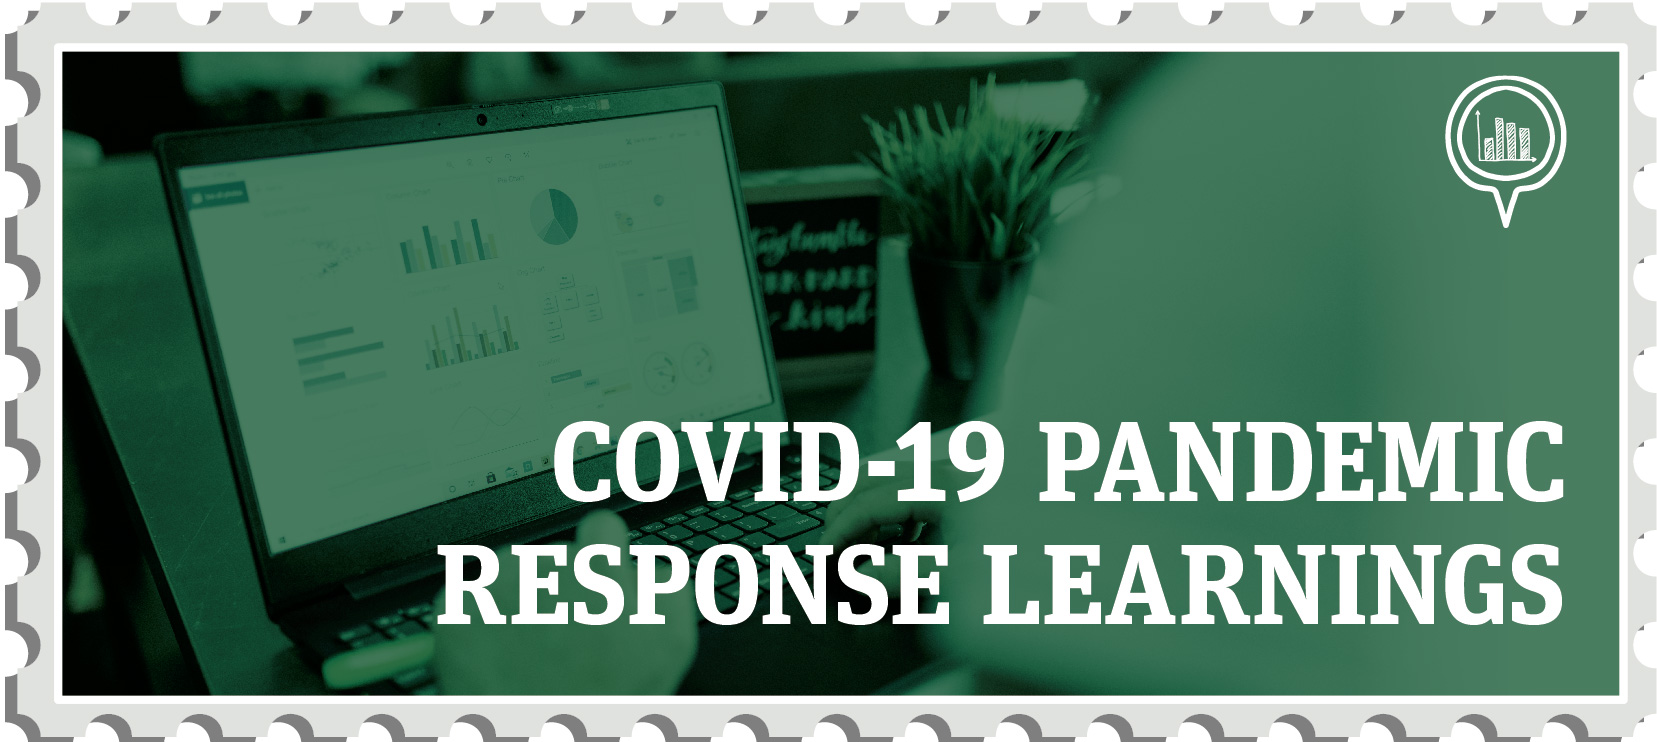 COVID-19 pandemic response learnings